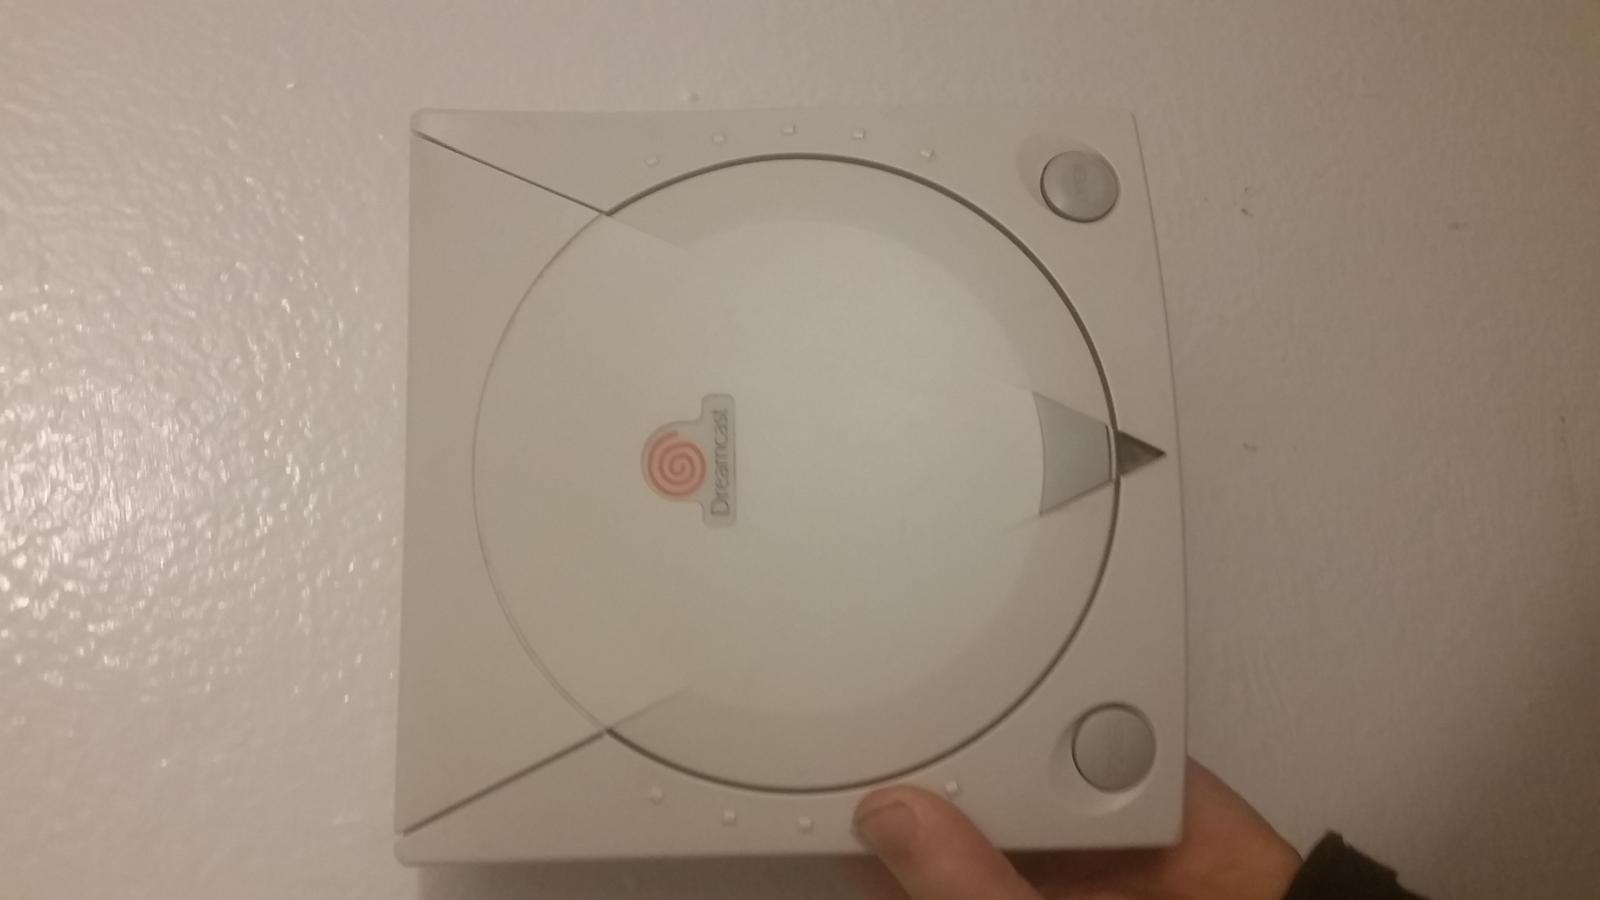 For sale Sega Dreamcast w/ Network adapter (plays burnt/backups) complete w/ 2 games